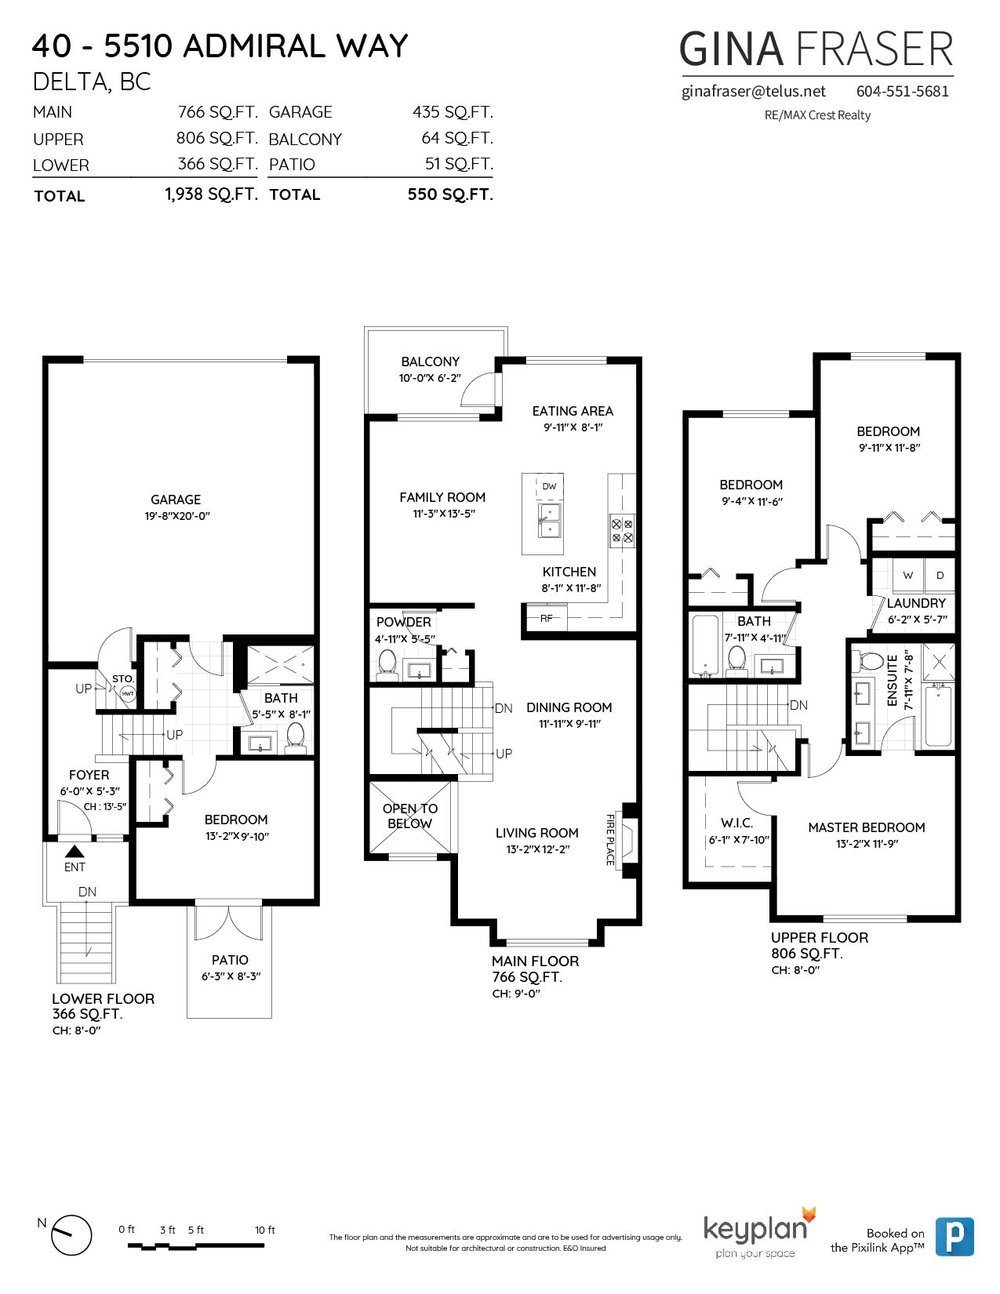 Floor Plan for a 4 Bedroom Townhouse in 